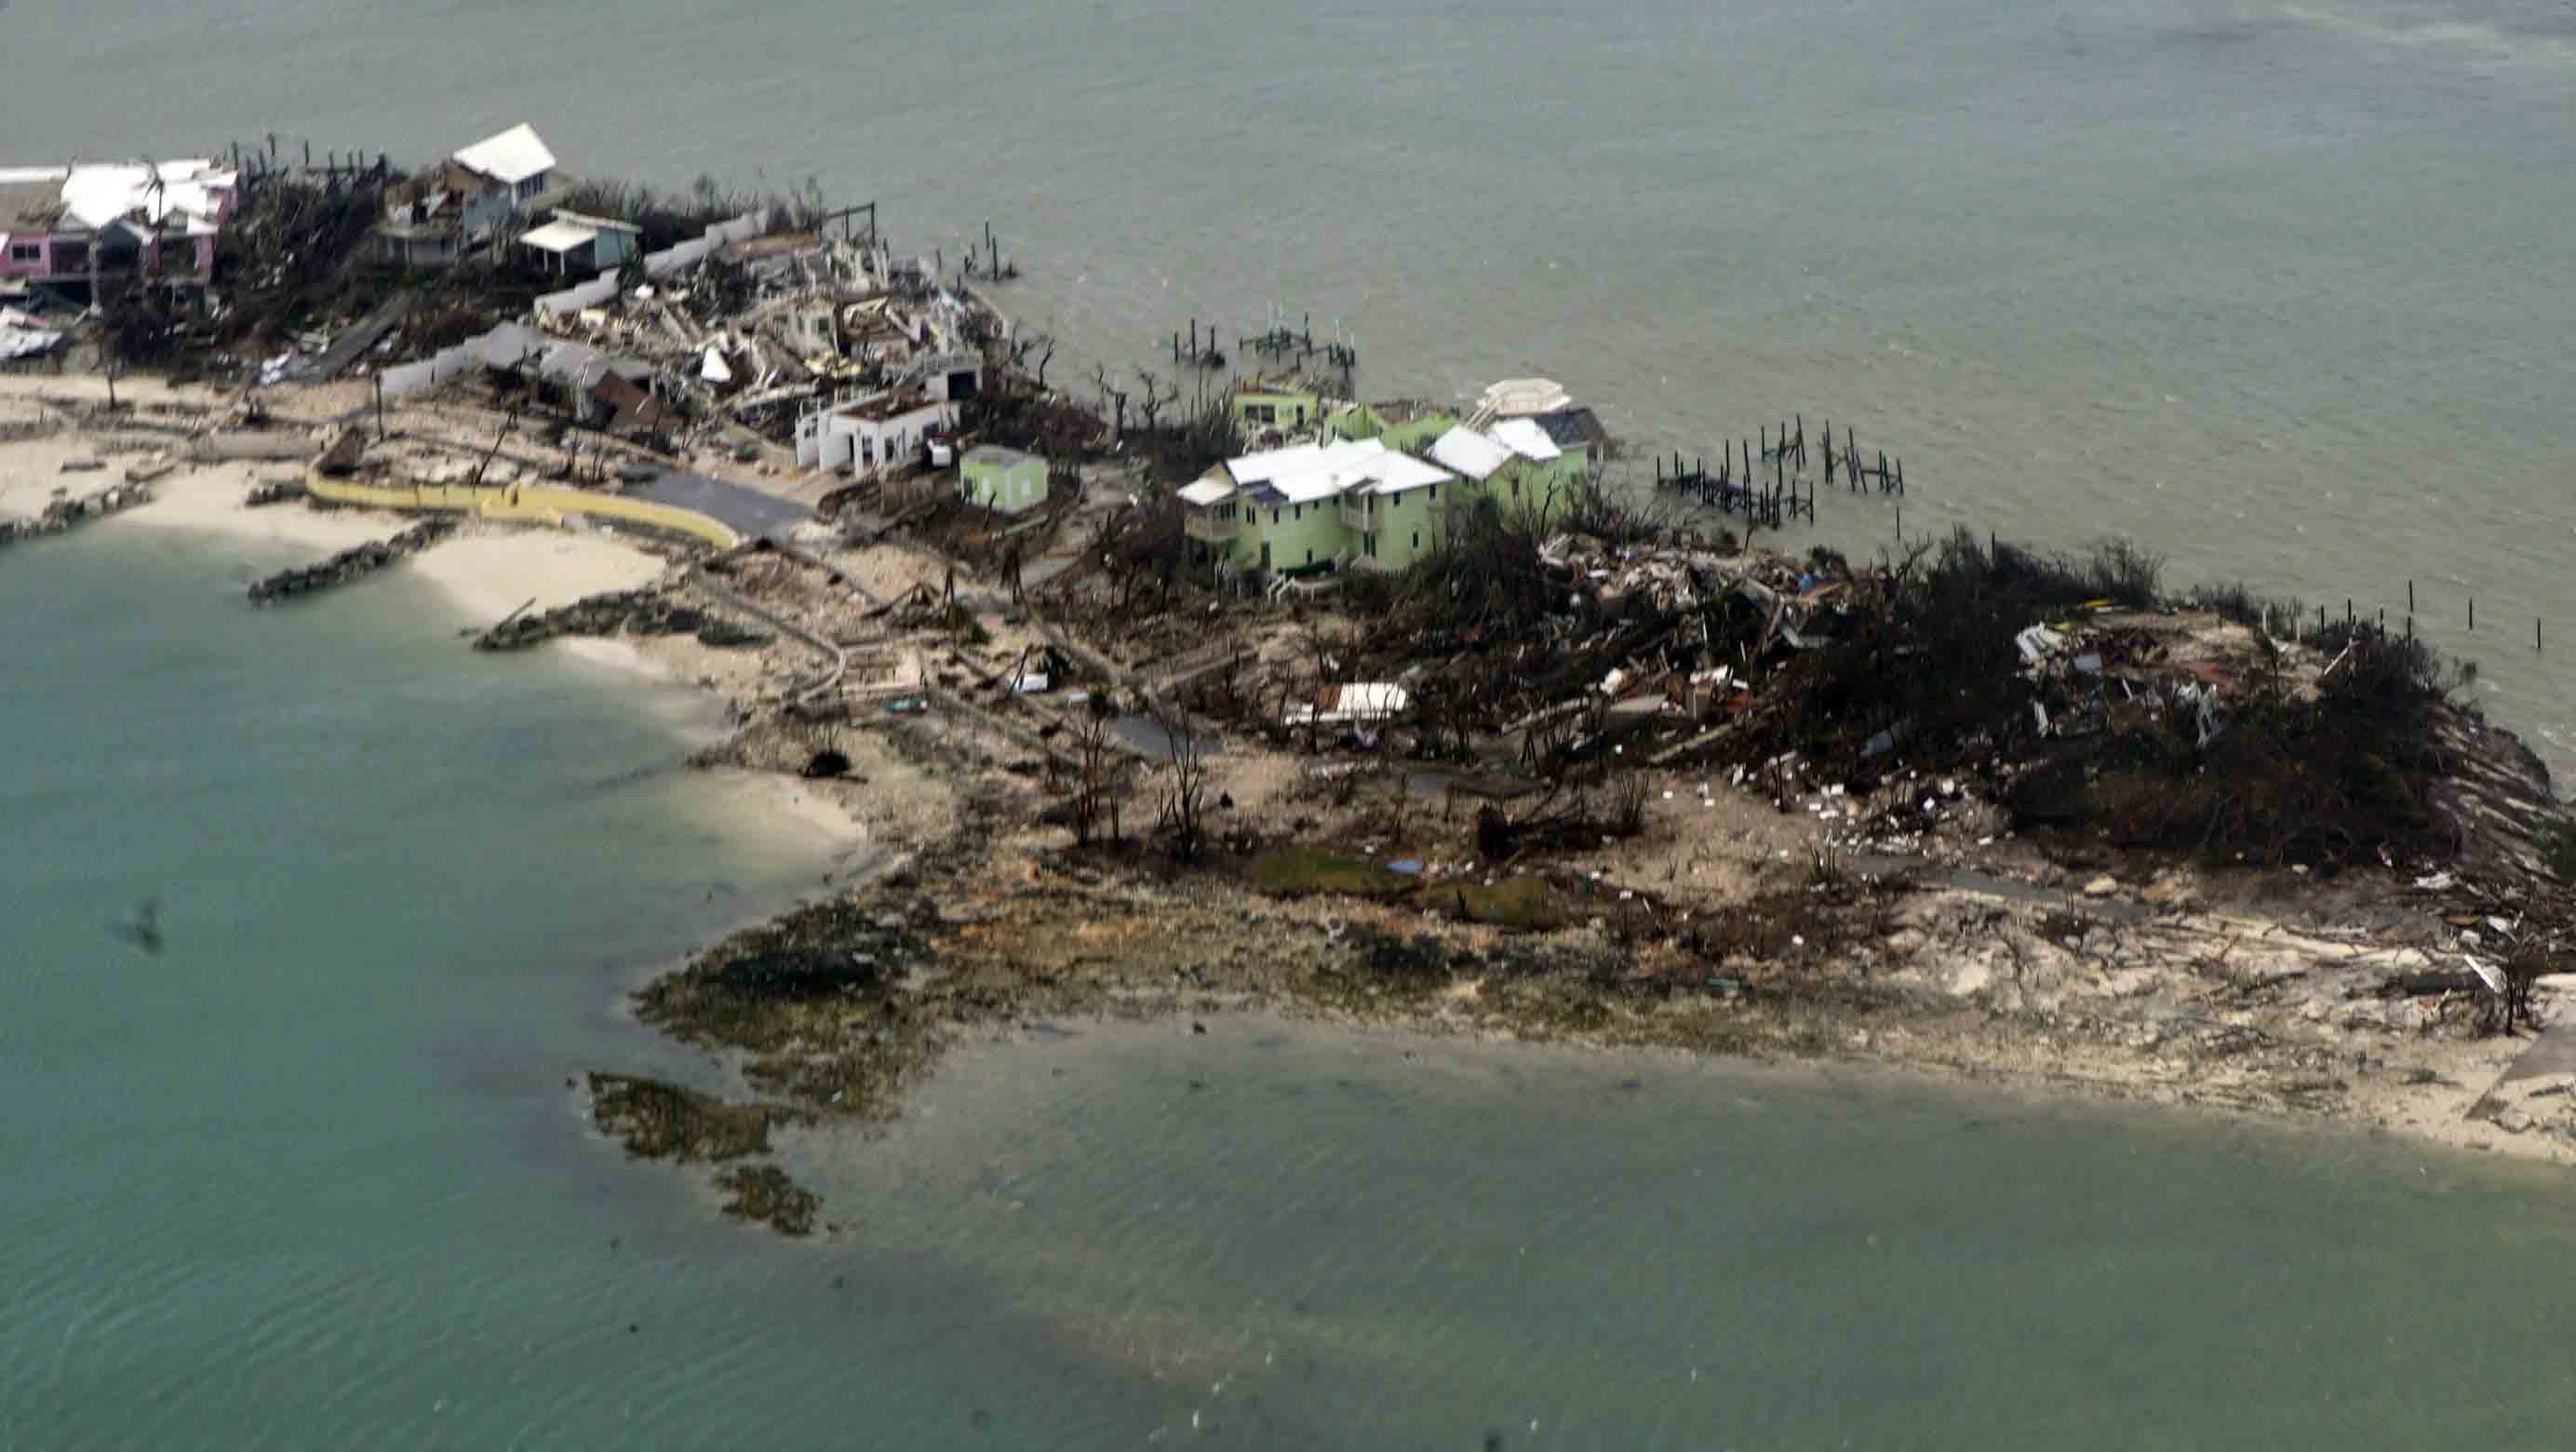 Dorian provoca catástrofe histórica en Bahamas, que espera ayuda humanitaria